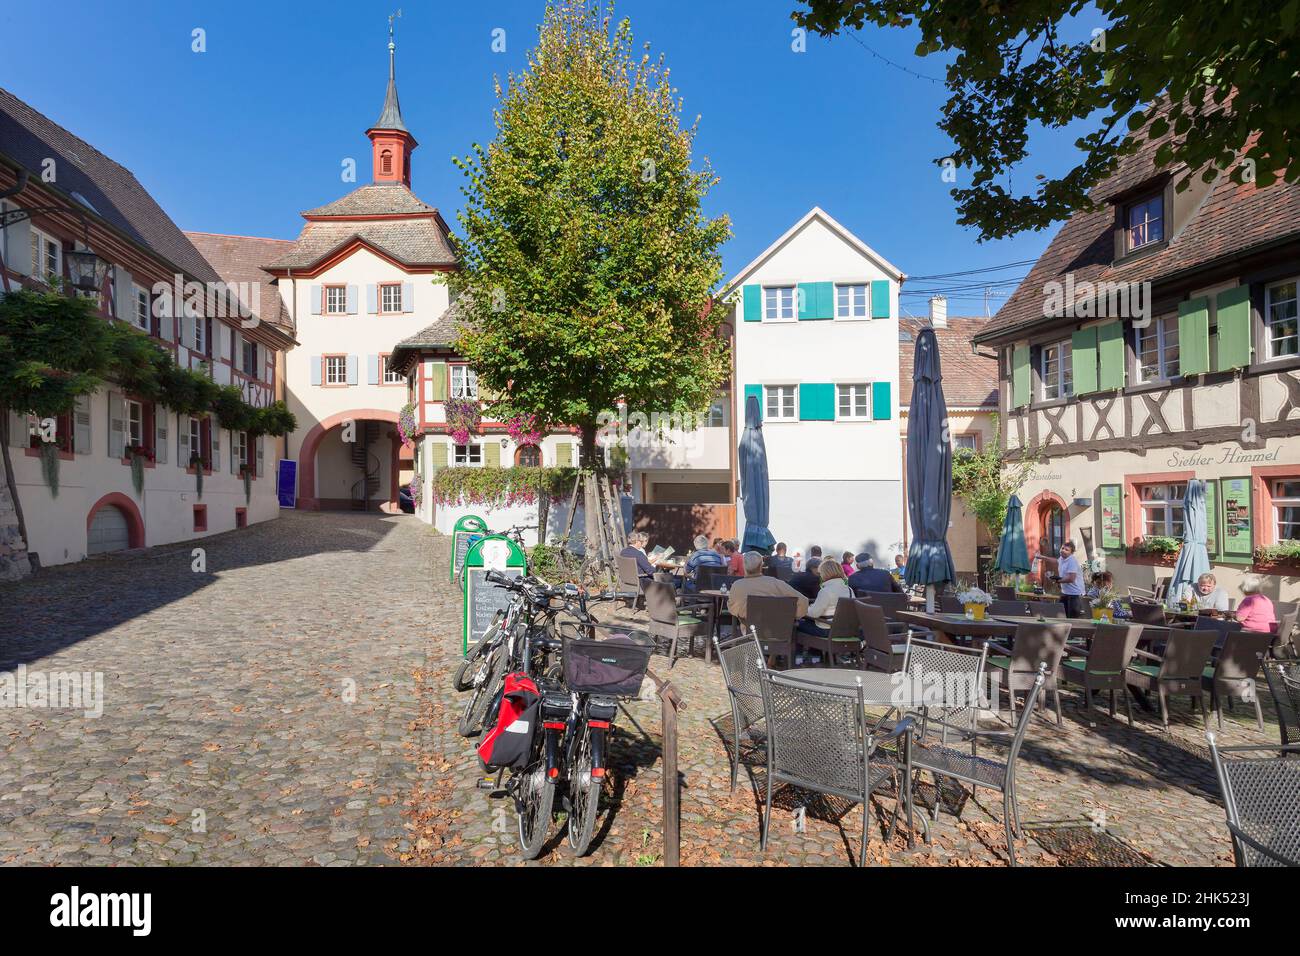 Porte de ville, Burkheim am Kaiserstuhl, Breisgau, Forêt Noire, Bade-Wurtemberg,Allemagne, Europe Banque D'Images